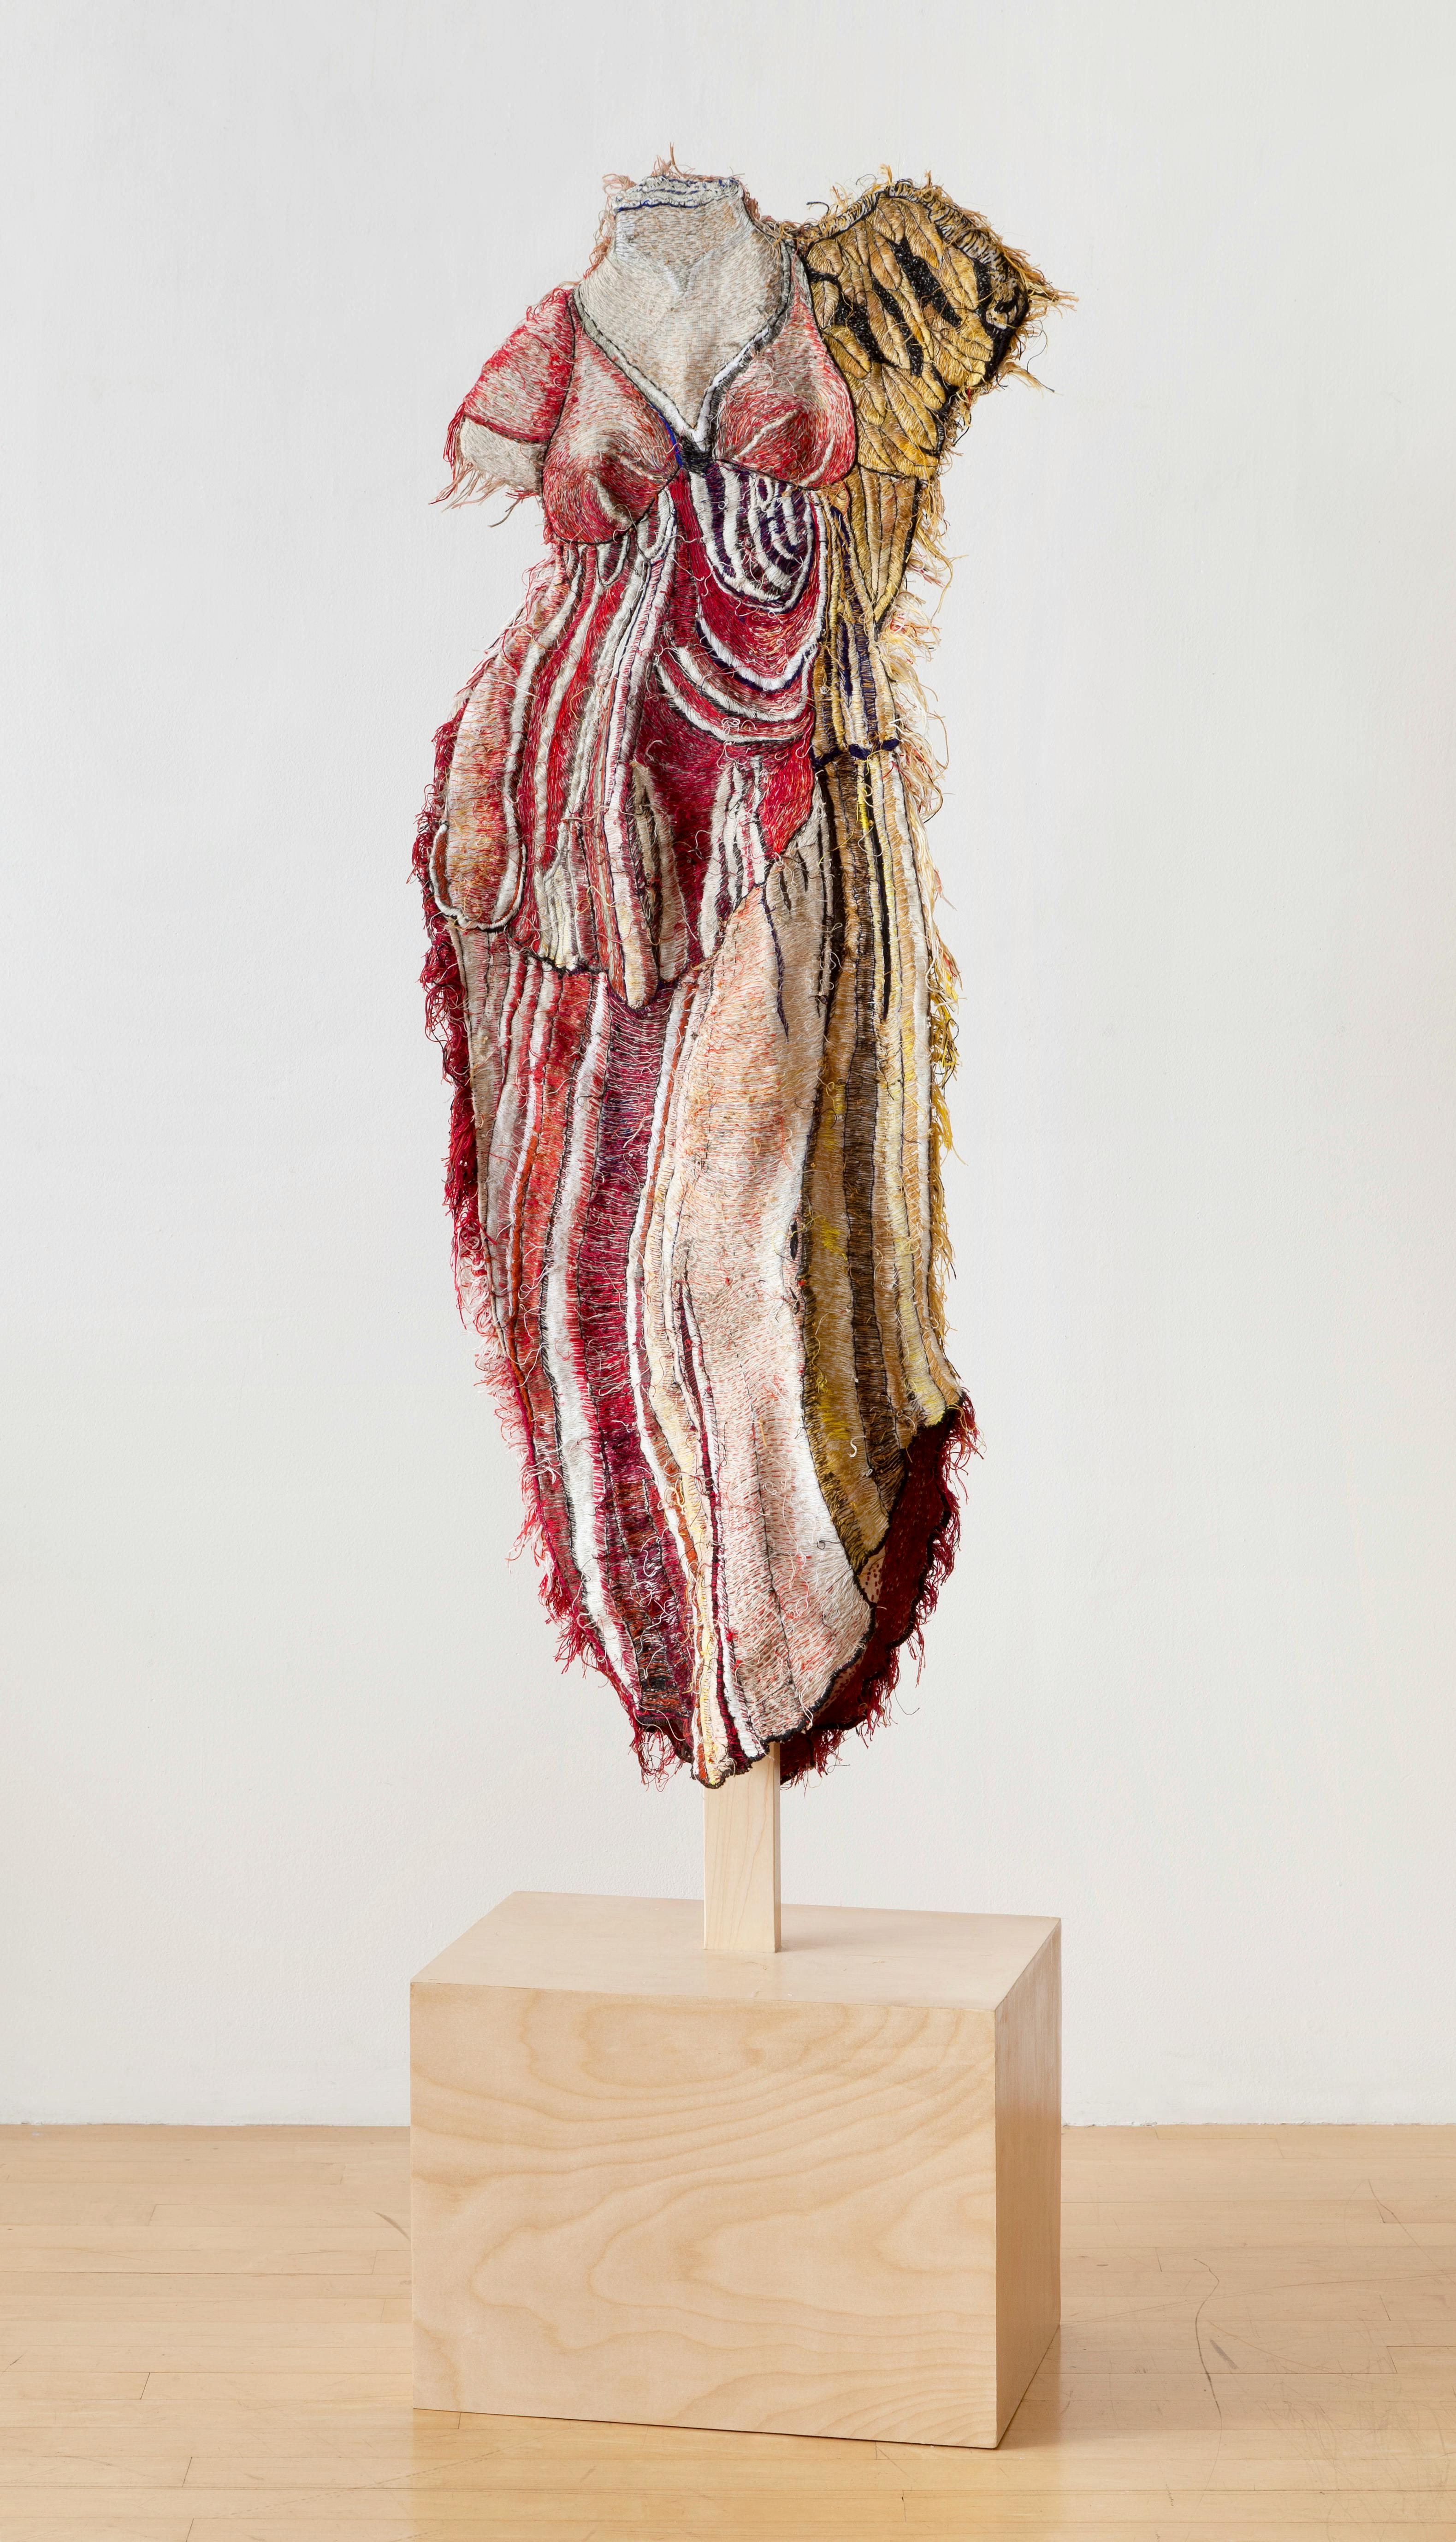 textile sculpture reminiscent of a Grecian dress displayed on a wood pedestal